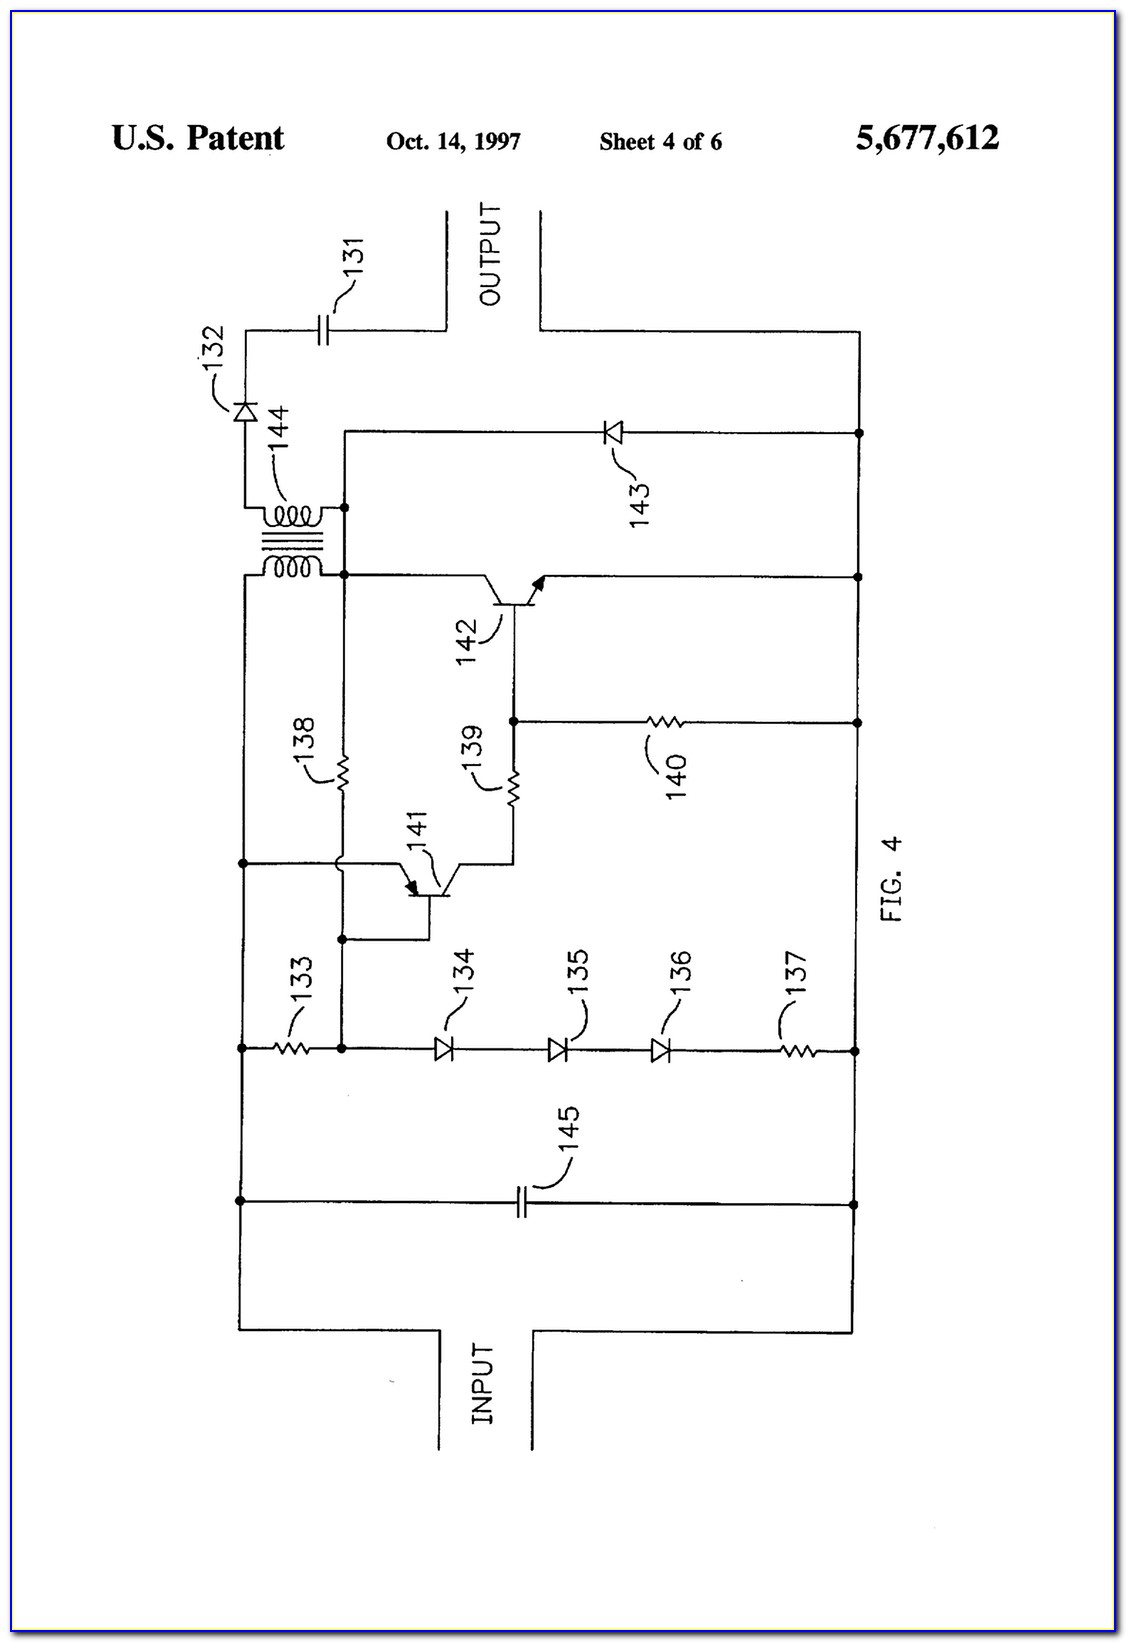 Bep Marine Battery Switch Wiring Diagram